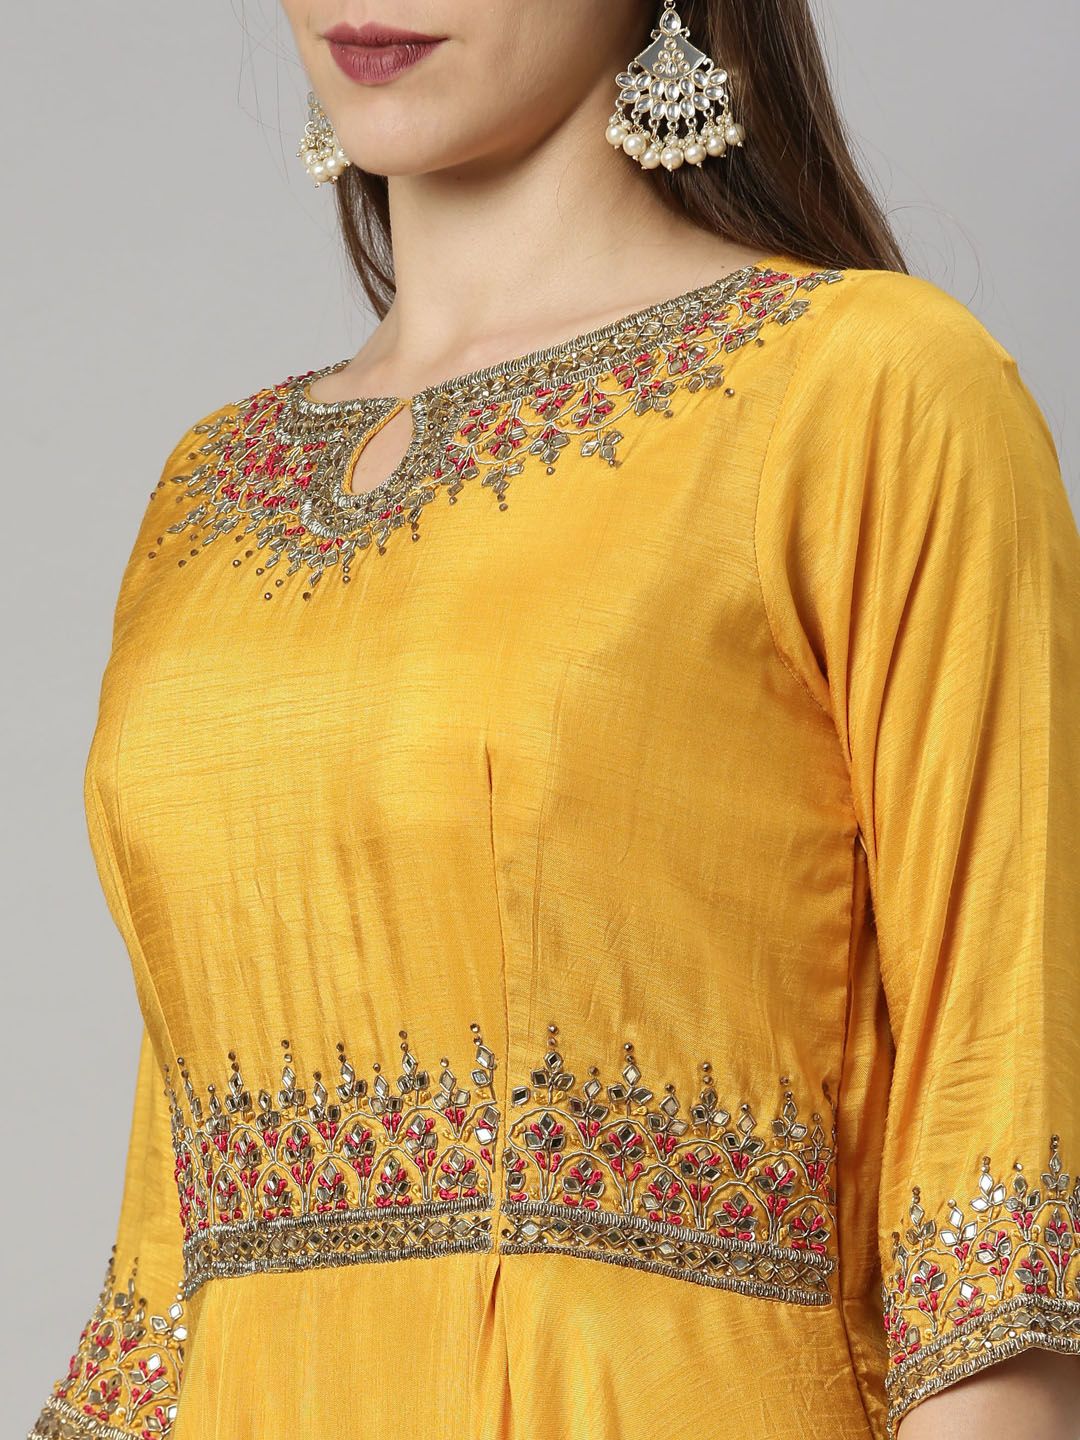 Neeru's Yellow Color Silk Fabric Suit-Anarkali